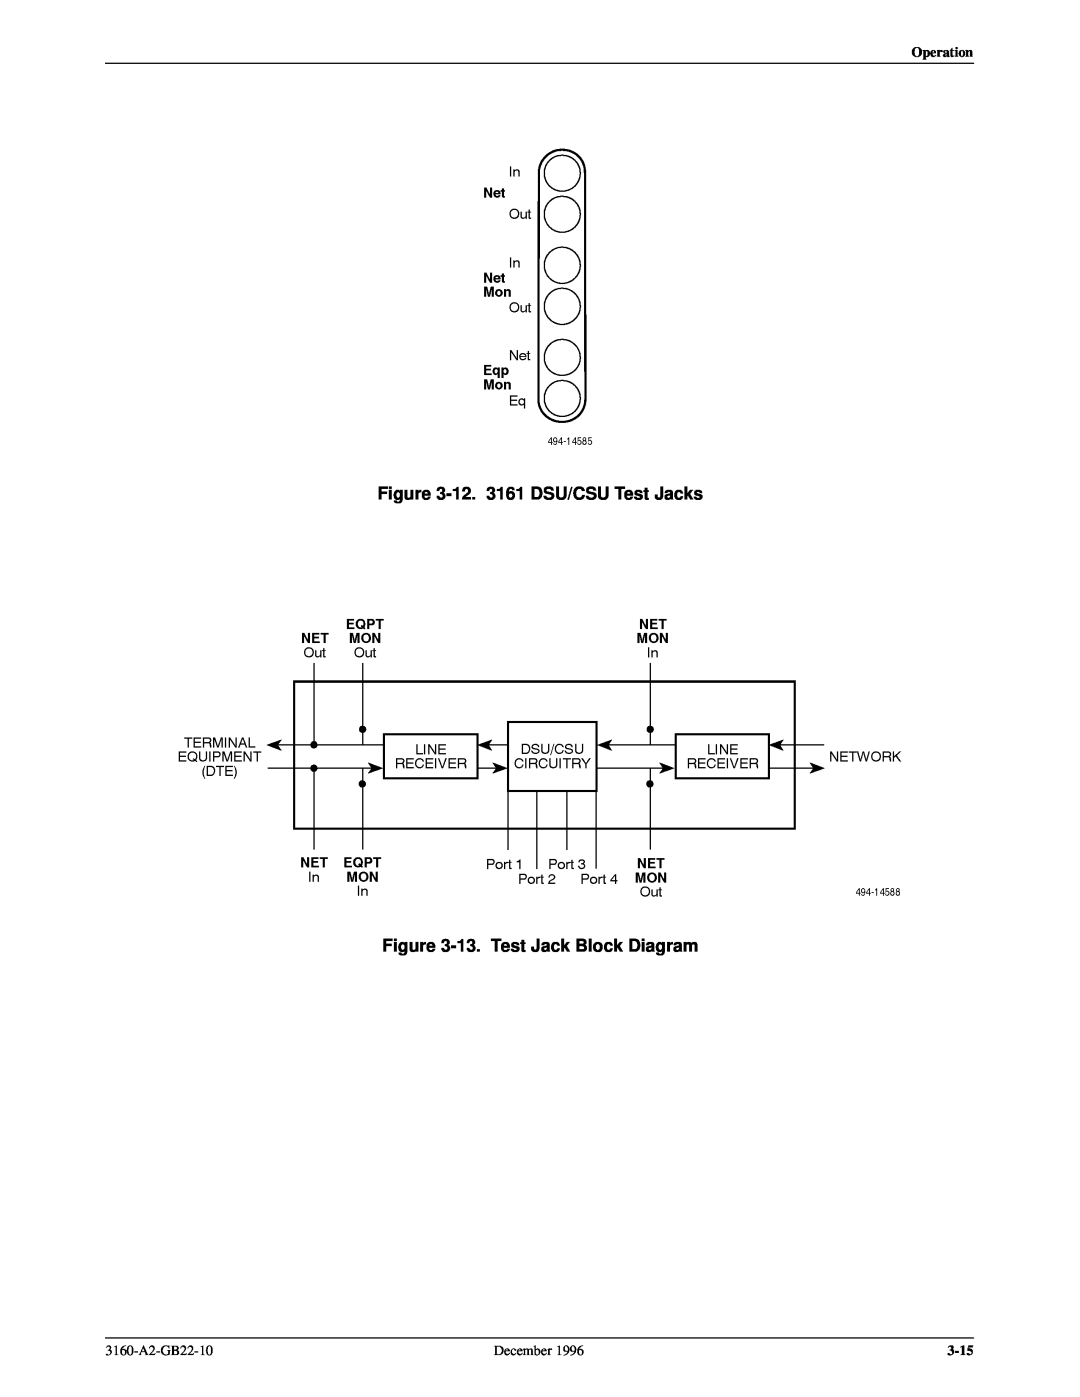 Paradyne 316x manual 12. 3161 DSU/CSU Test Jacks, 13. Test Jack Block Diagram, Operation, 3160-A2-GB22-10, December, 3-15 